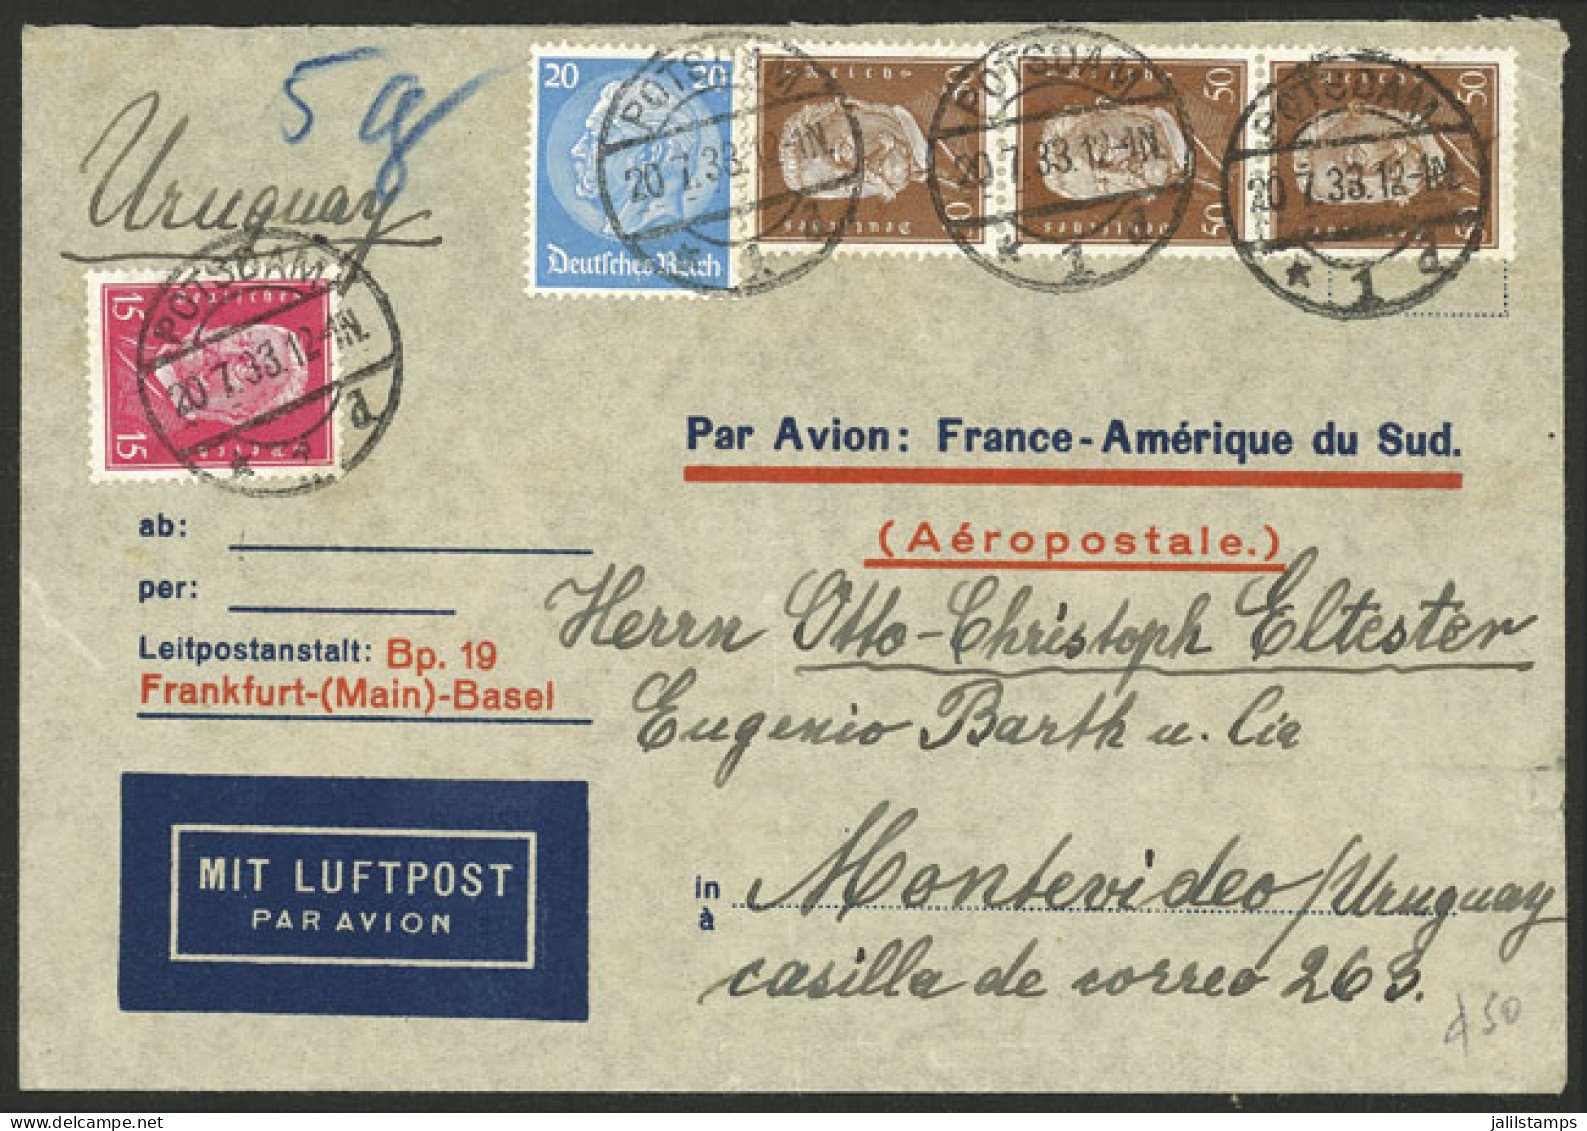 GERMANY: 20/JUL/1933 Postdam - Uruguay, Airmail Cover Sent By Air France Con Franqueo De 1,85Mk., Al Dorso Tiene Tránsit - Briefe U. Dokumente